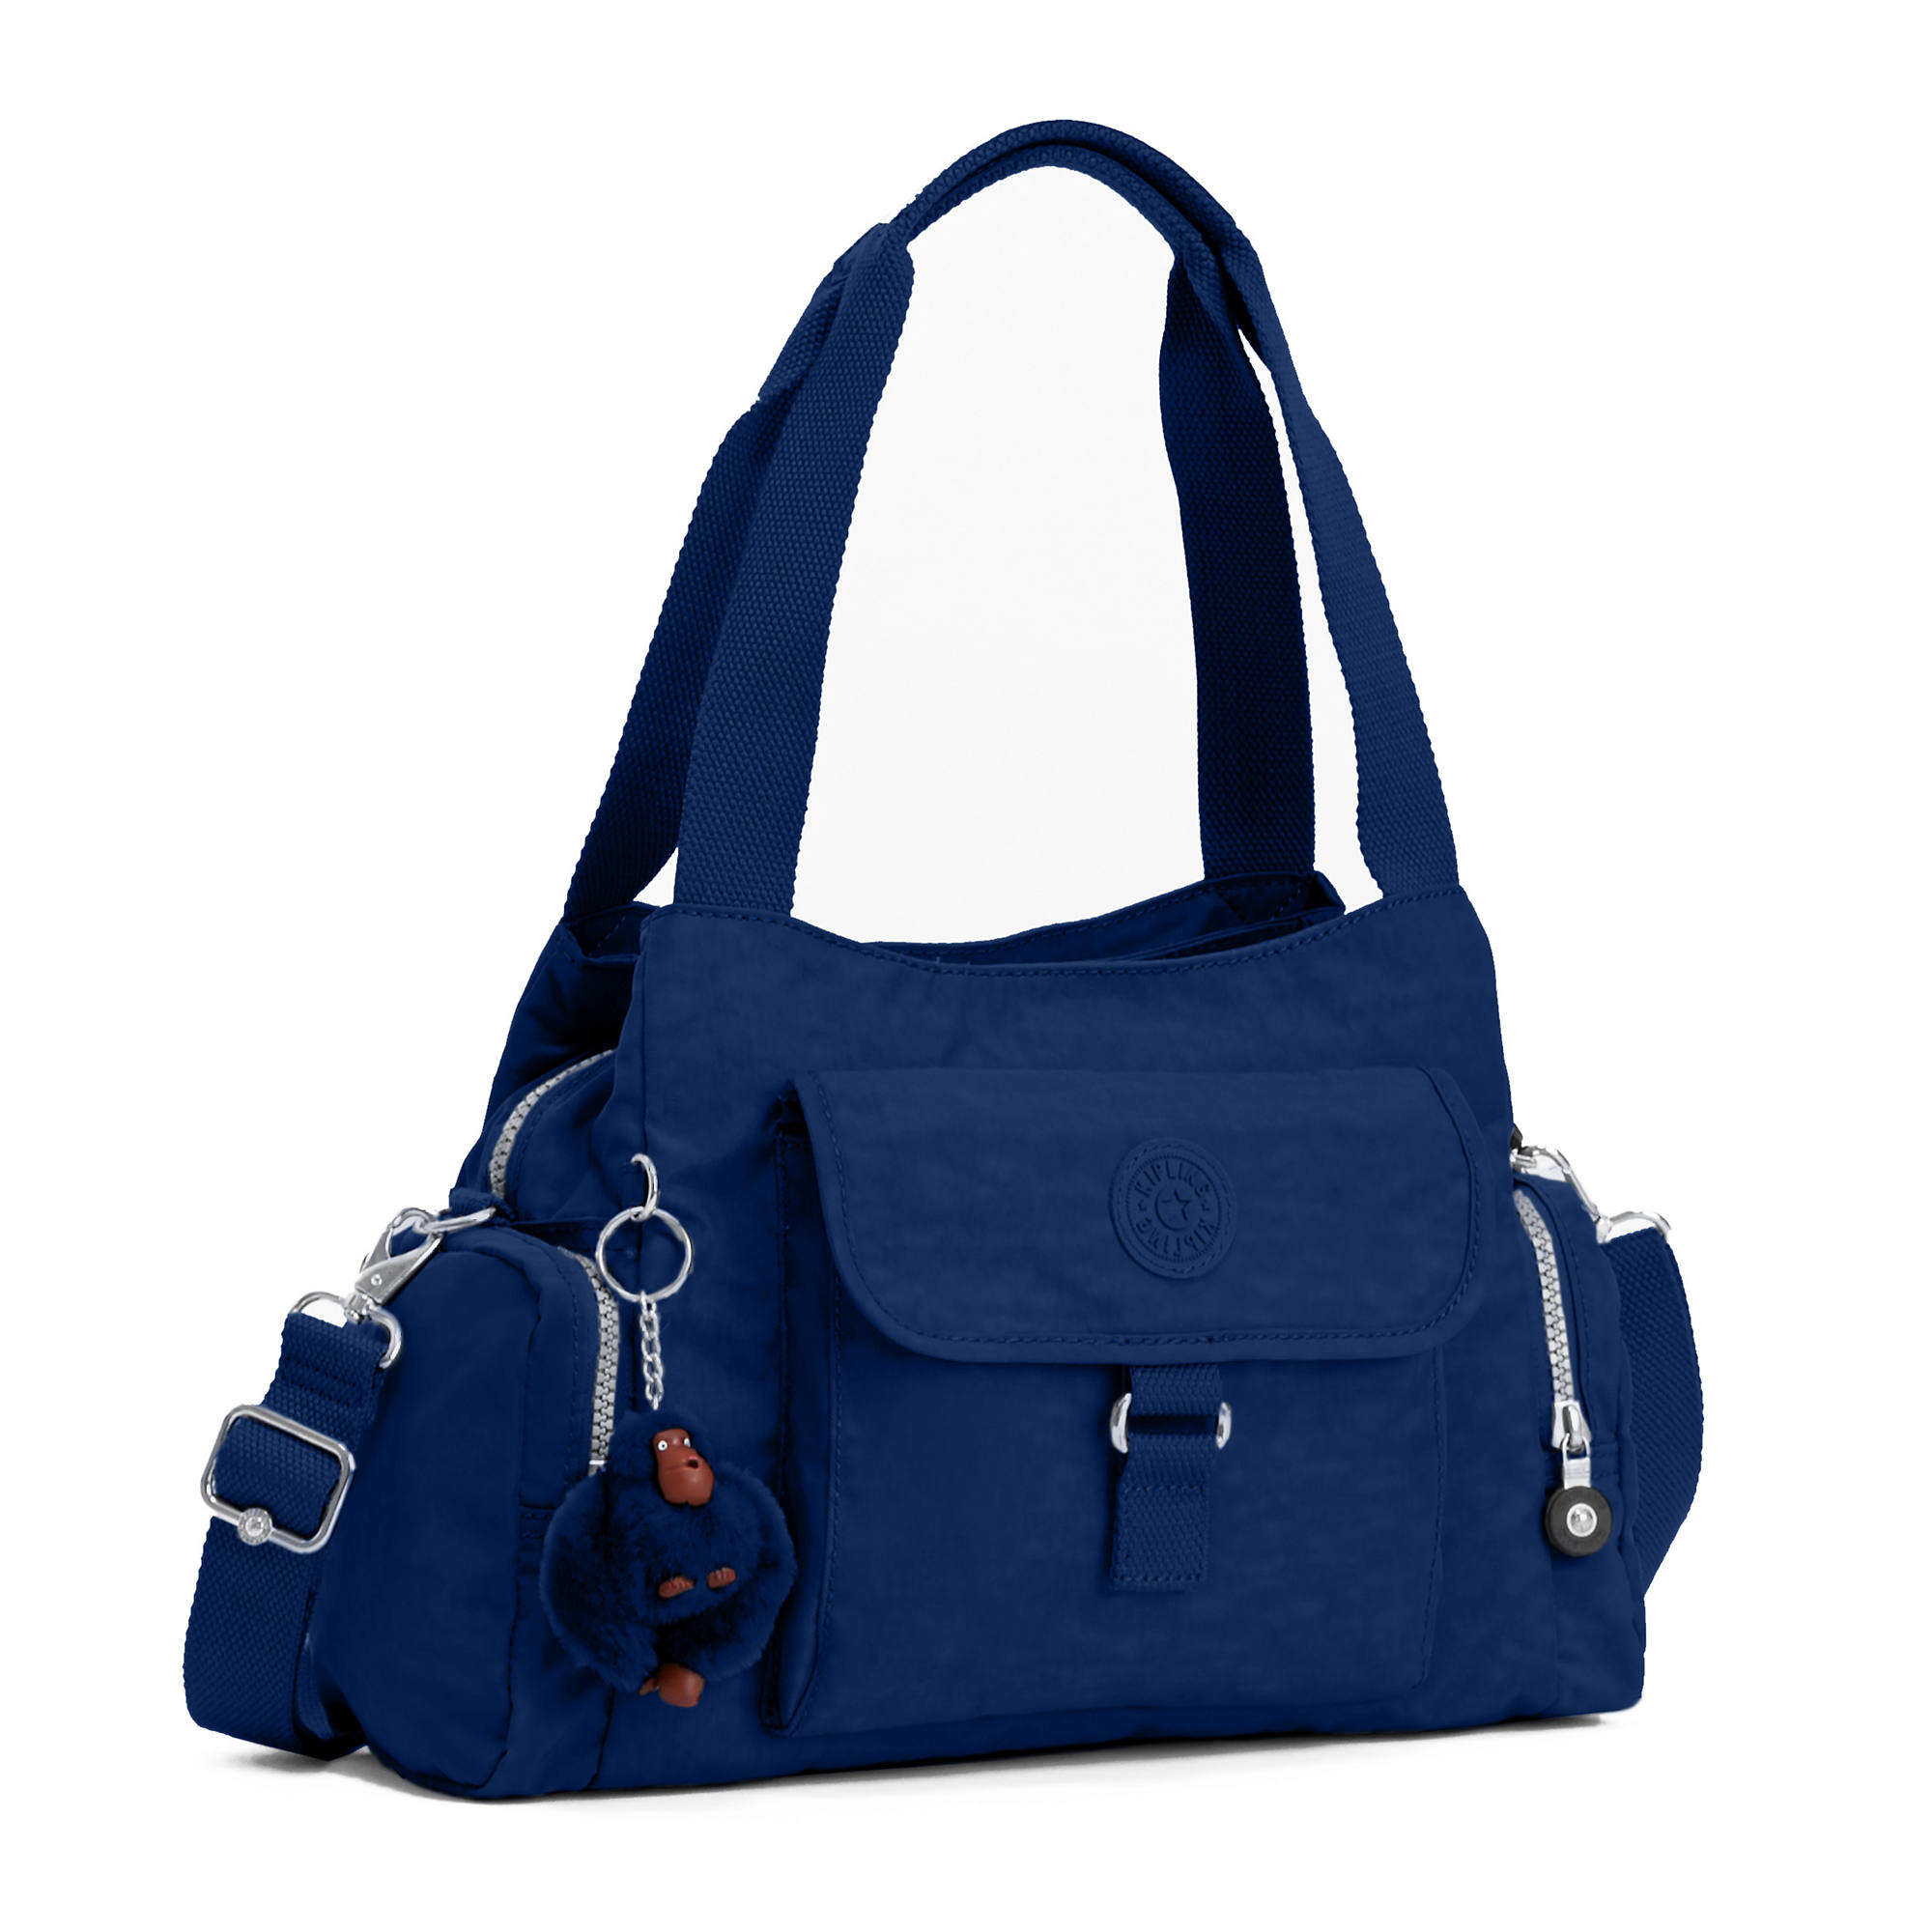 Kipling Felix Large Handbag | eBay